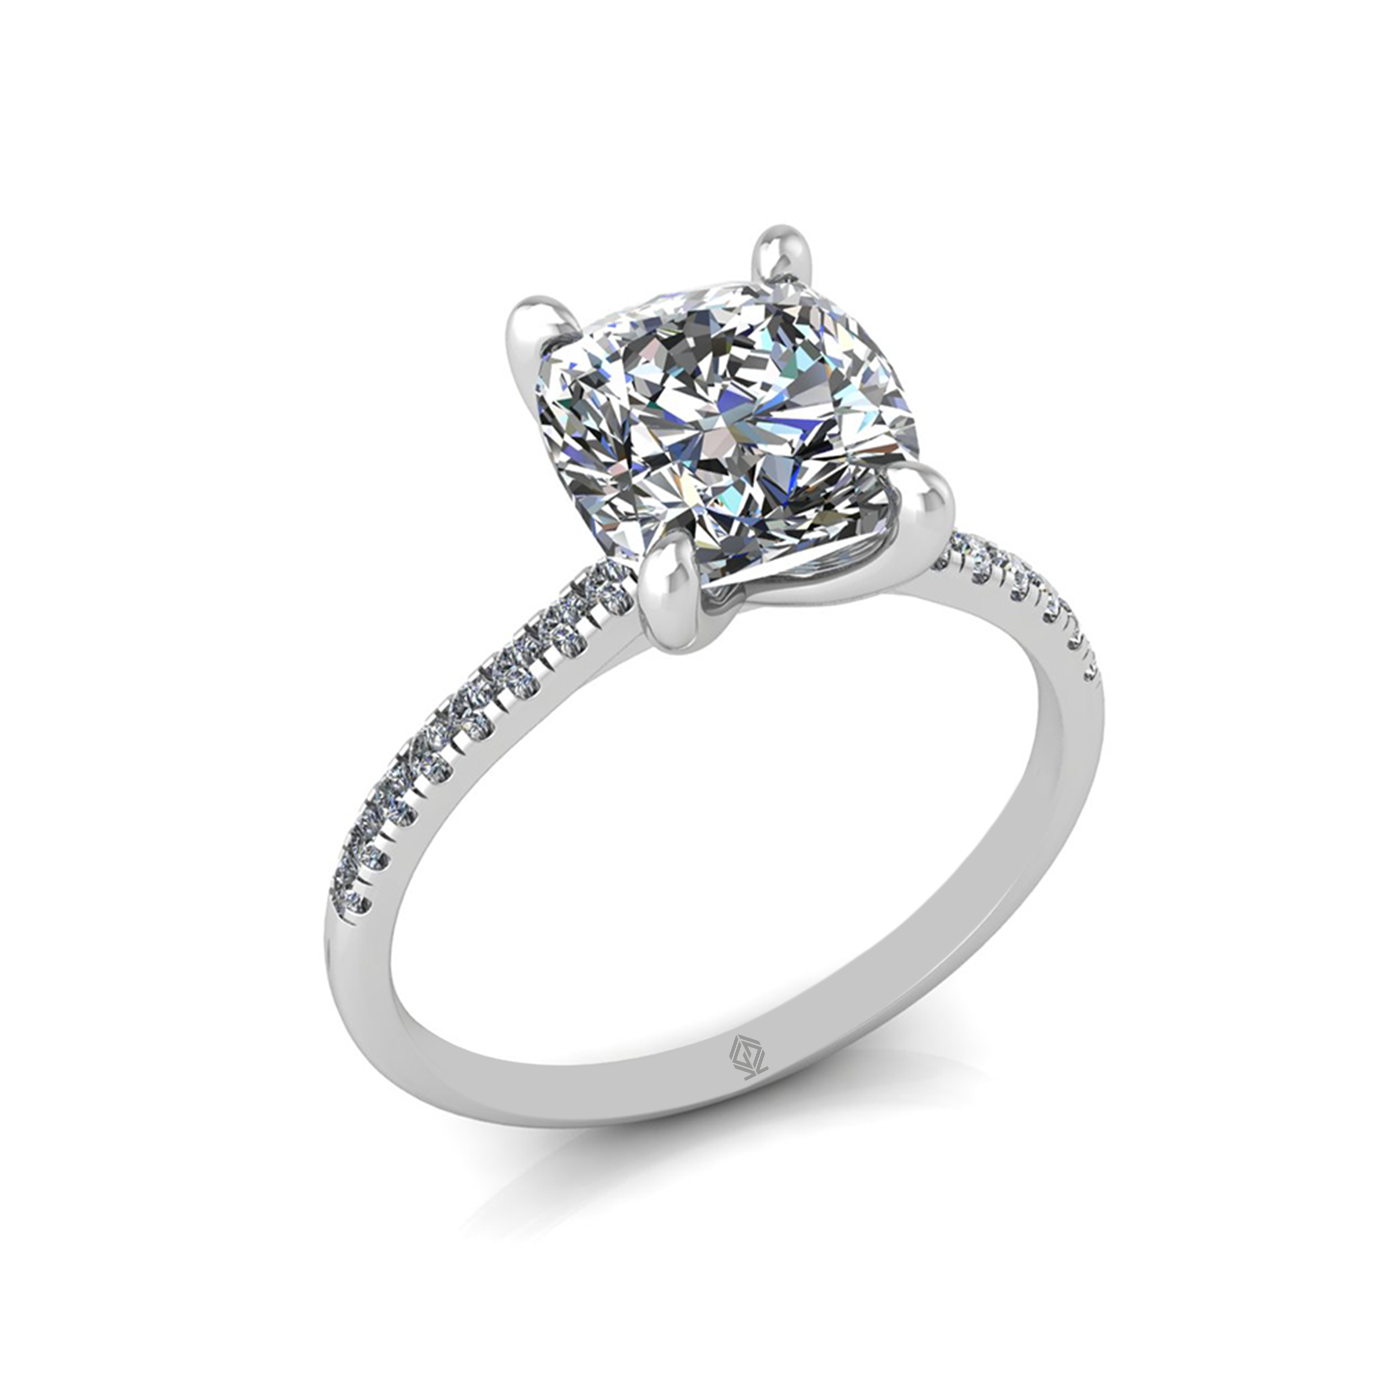 18k white gold 2.5ct 4 prongs cushion cut diamond engagement ring with whisper thin pavÉ set band